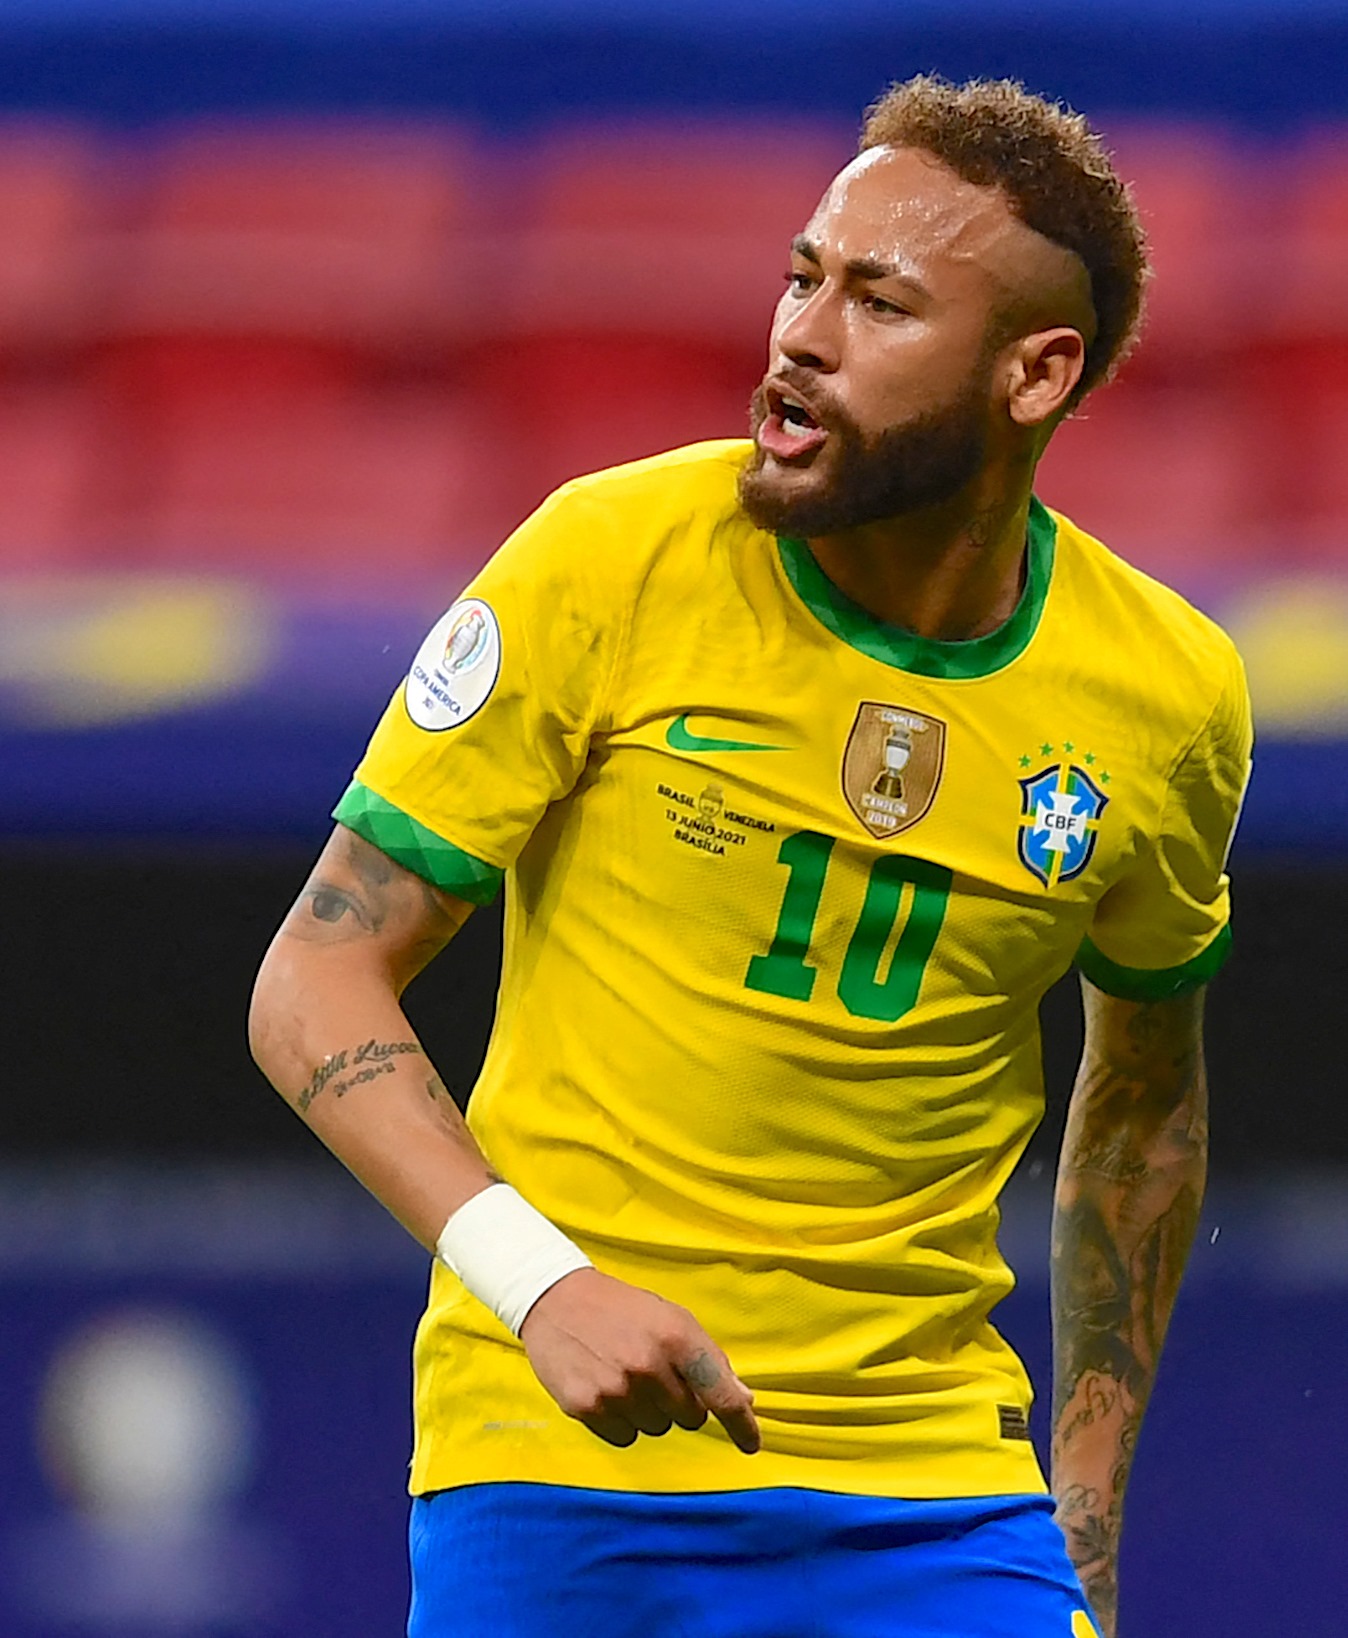 Neymar on target as Brazil rout Venezuela in Copa America opener